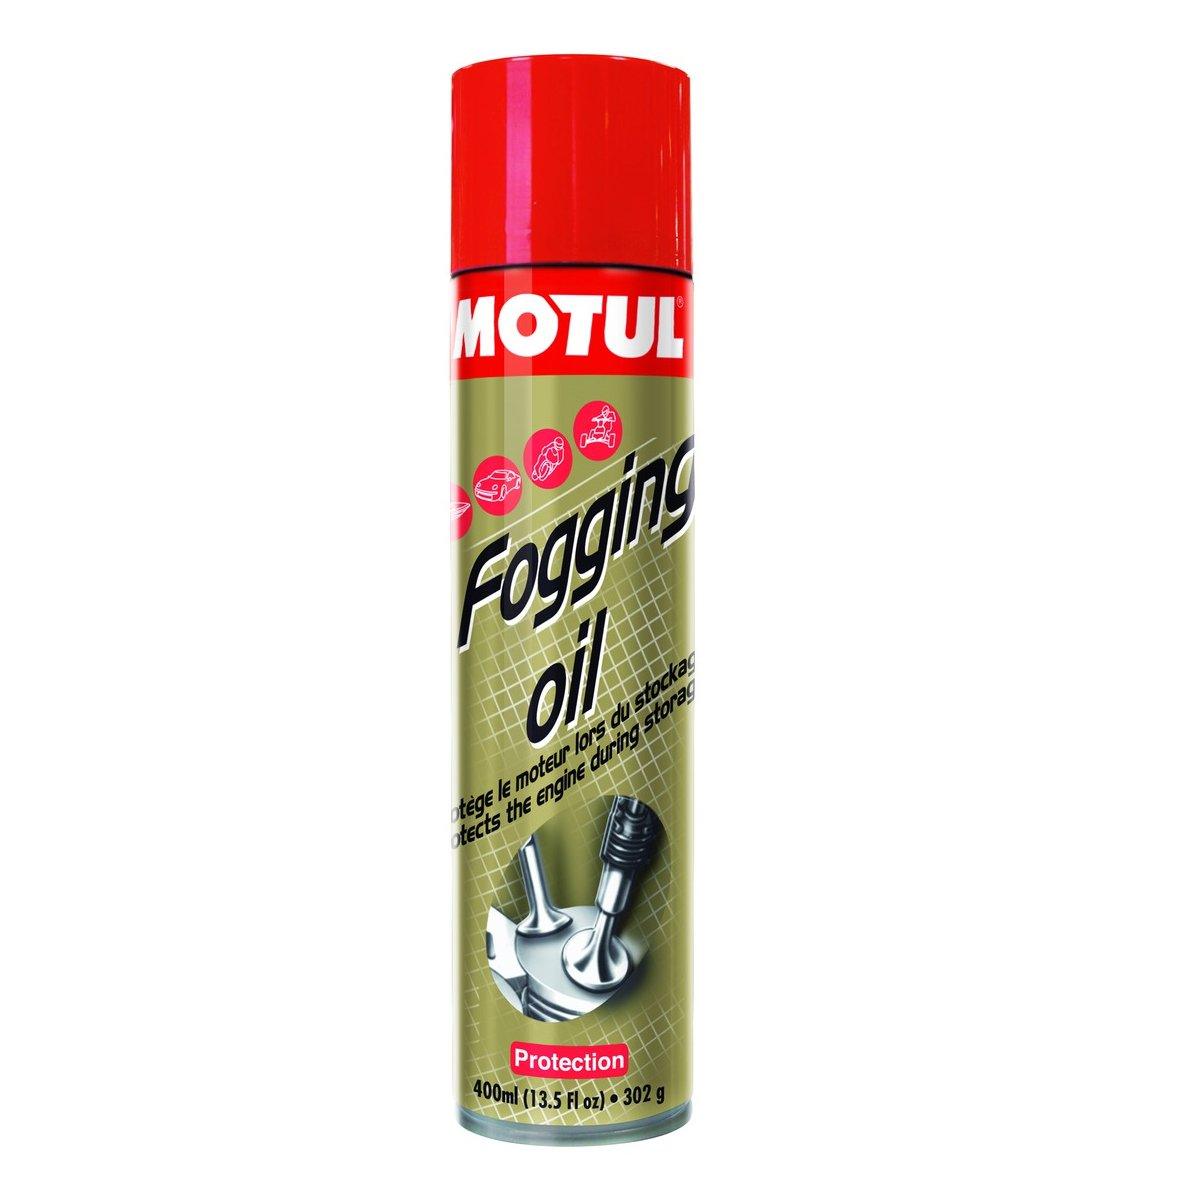 Motul Fogging Oil Spray 400ml - Gold Red - Browse our range of Care: Oils & Liquids - getgearedshop 